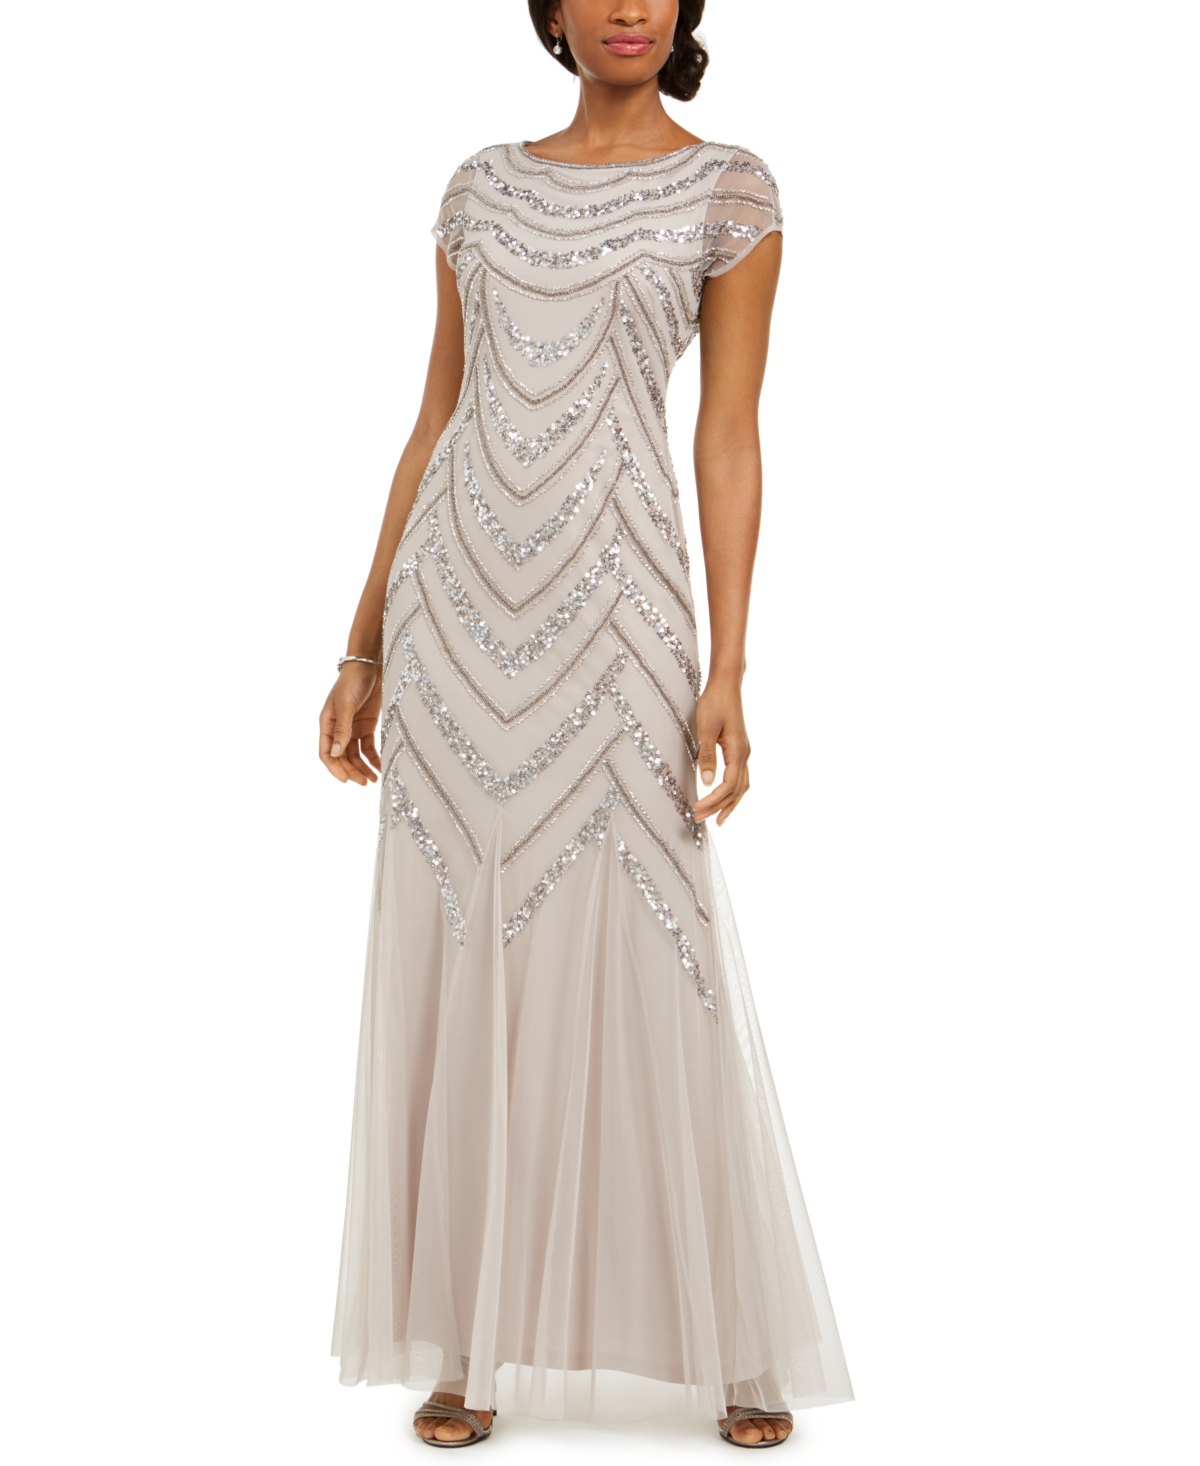 1920s Wedding Dresses- Art Deco Wedding Dress, Gatsby Wedding Dress Adrianna Papell Embellished Godet-Inset Gown - Marble Taupe $249.00 AT vintagedancer.com